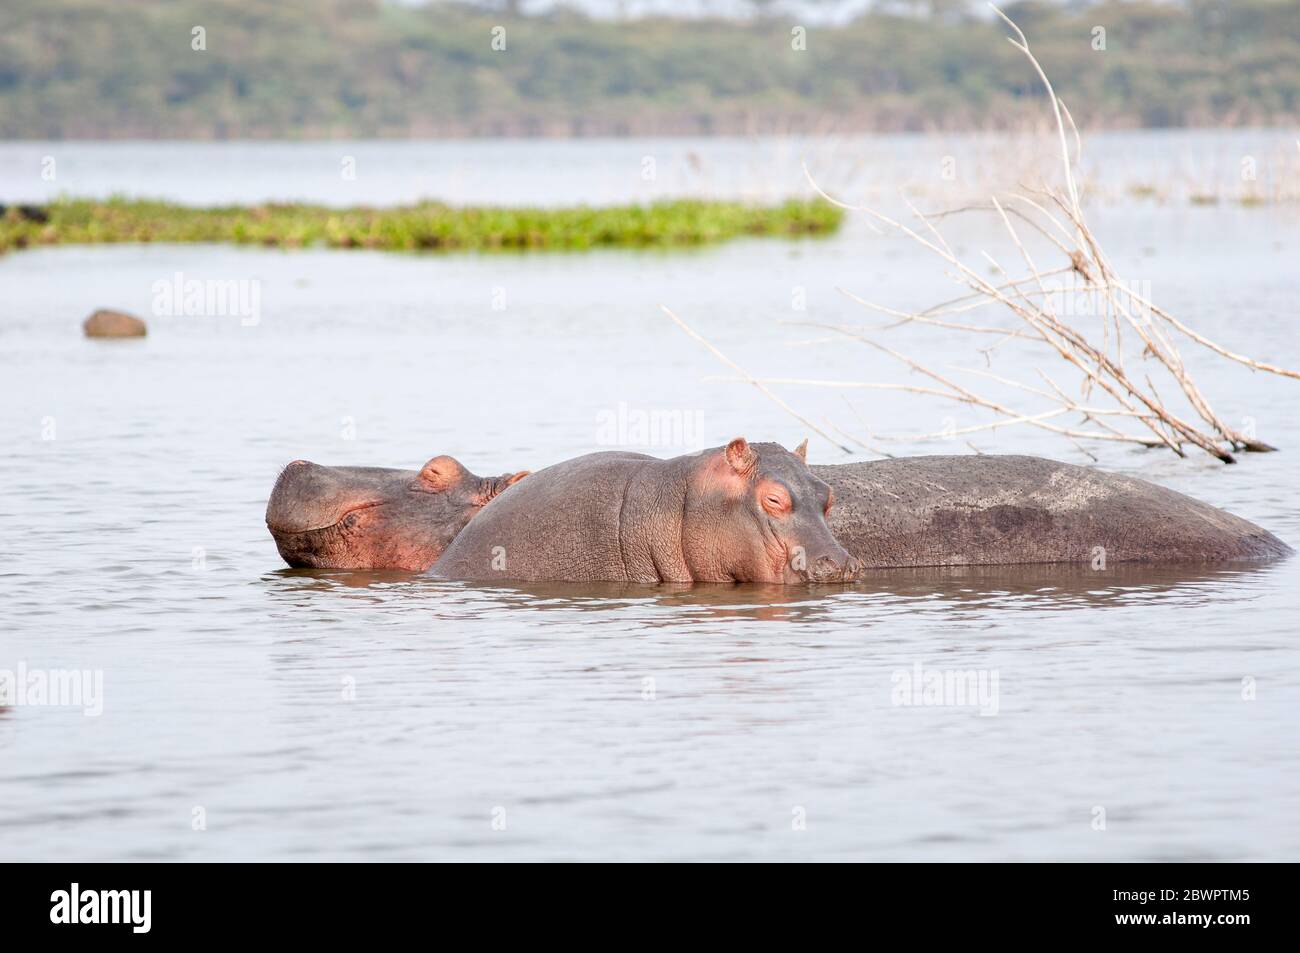 Female common hippopotamus and its calf, Hippopotamus amphibius, resting in water in Lake Naivasha National Park. Kenya. Africa. Stock Photo